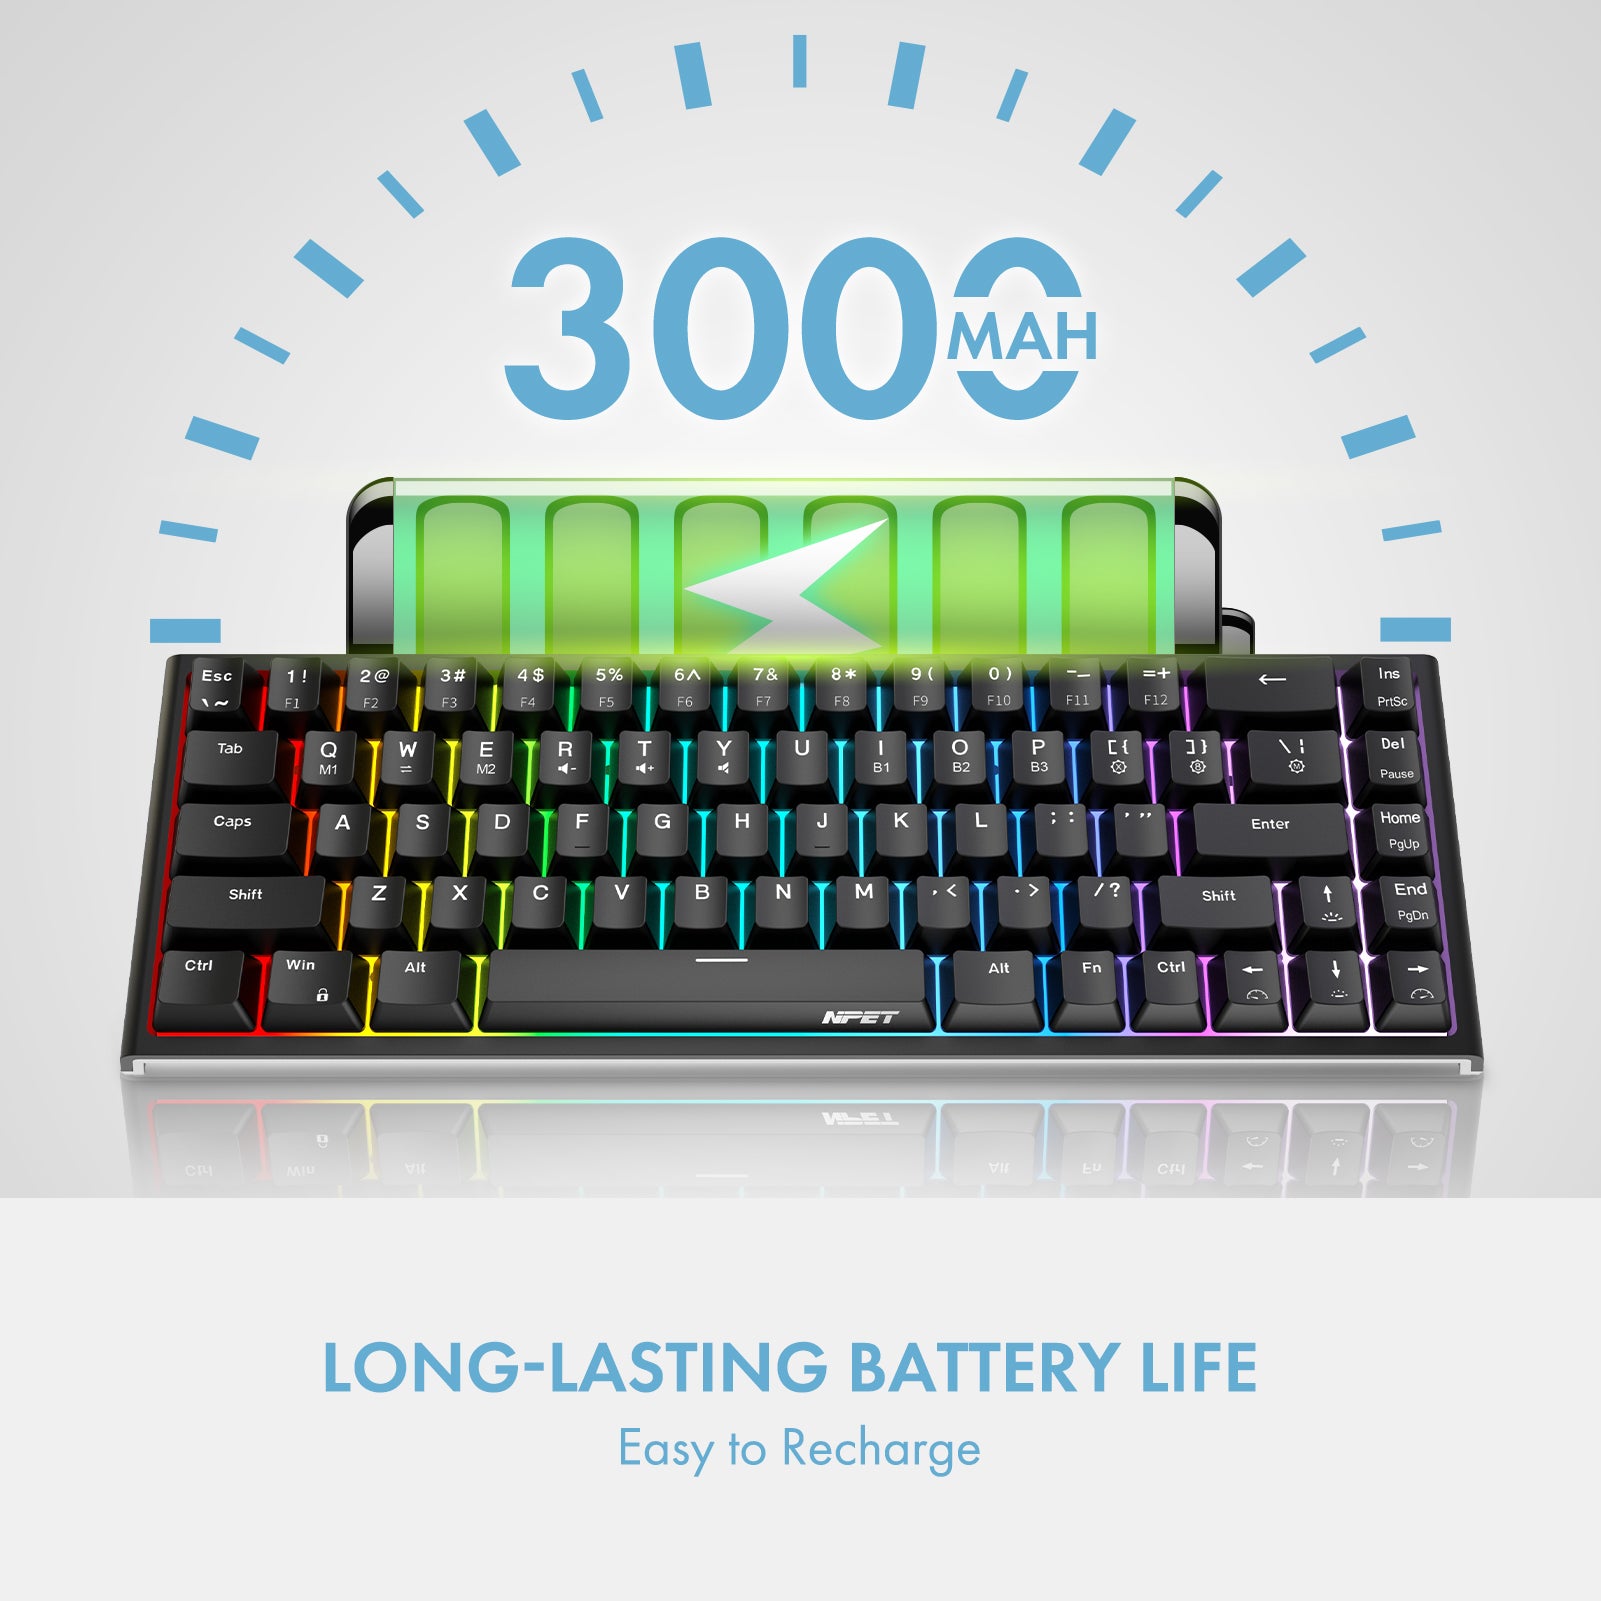 NPET K621 60% Gaming Keyboard, Triple Mode 2.4G/BT5.0/USB-C RGB Backlit Keyboard